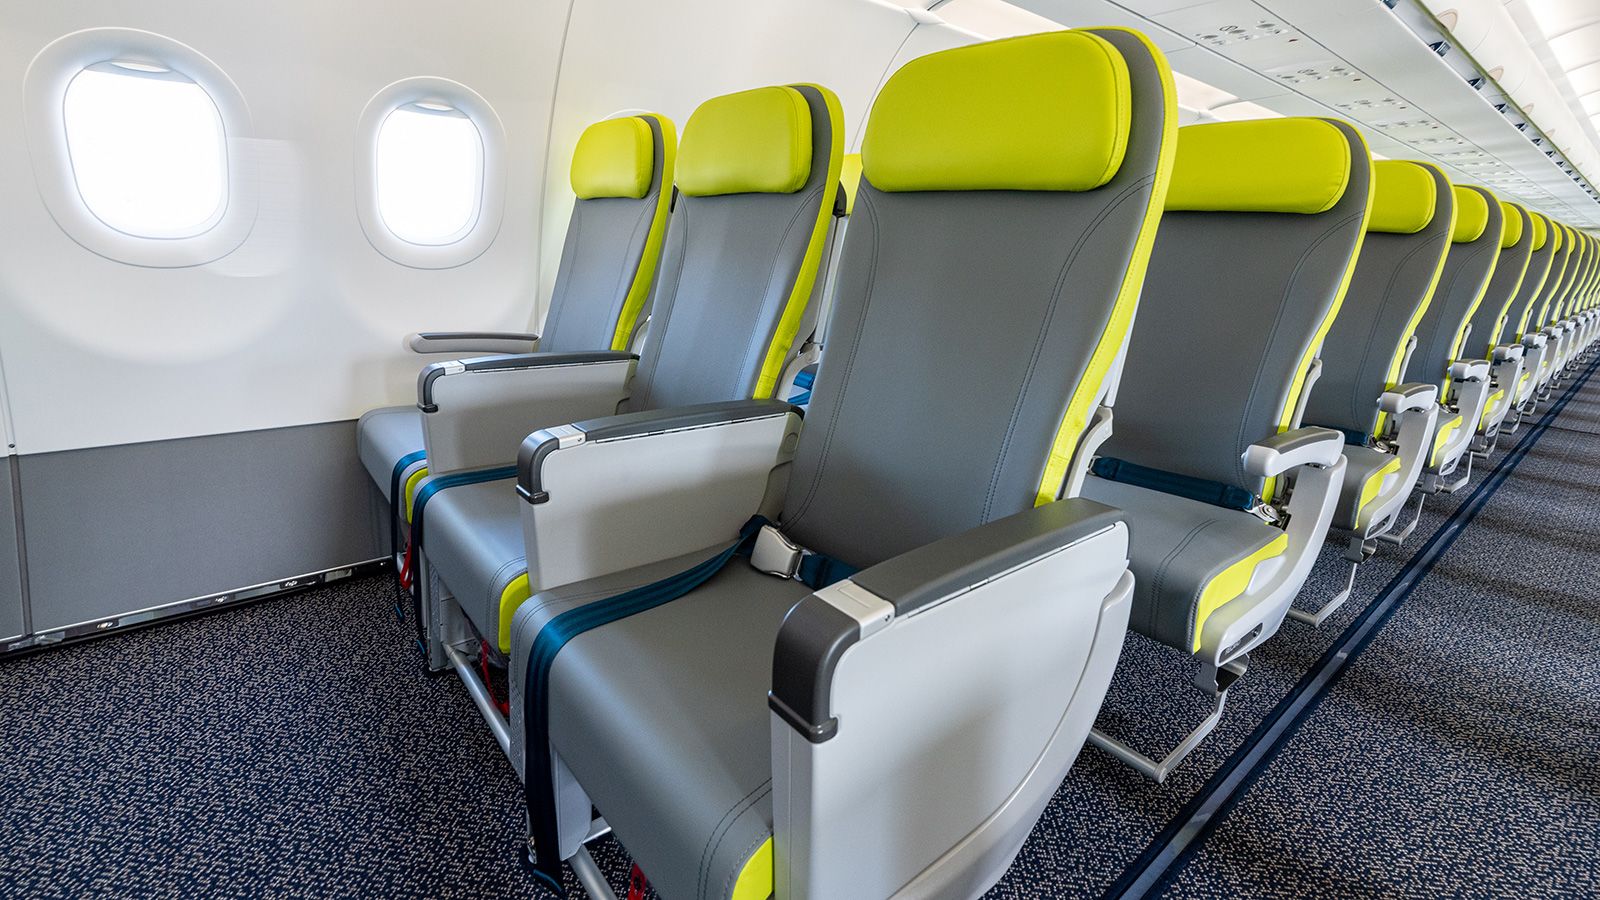 https://media.cnn.com/api/v1/images/stellar/prod/230103130826-02-airplane-reclining-seats-a321neo.jpg?c=original